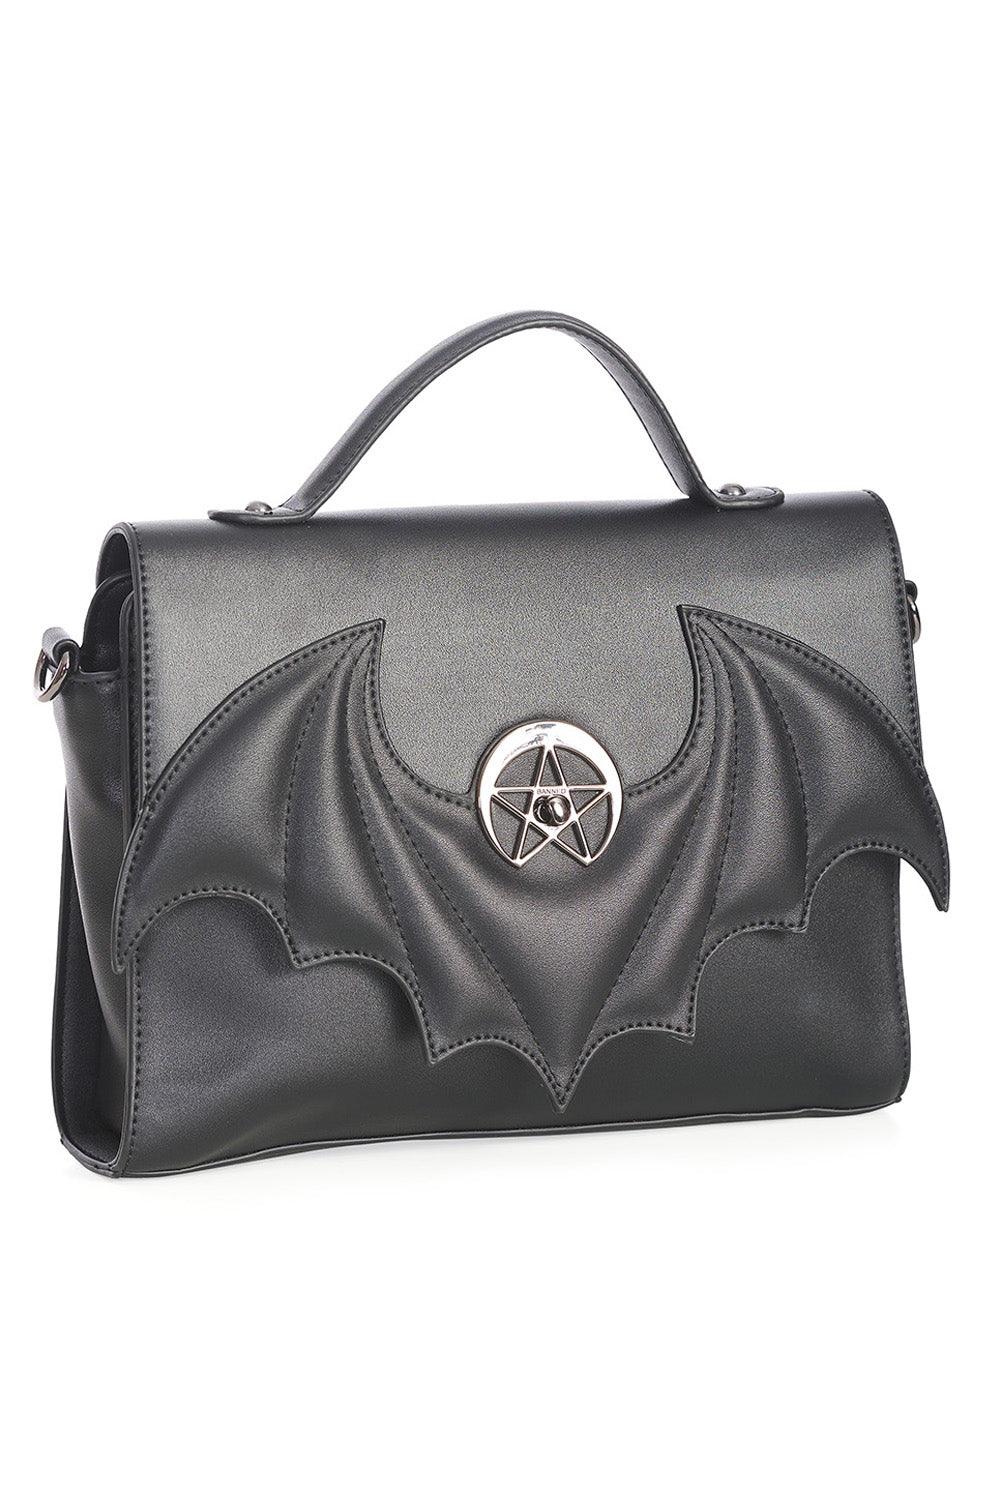 Banned Apparel Bat Religion Crossbody Bag - VampireFreaks